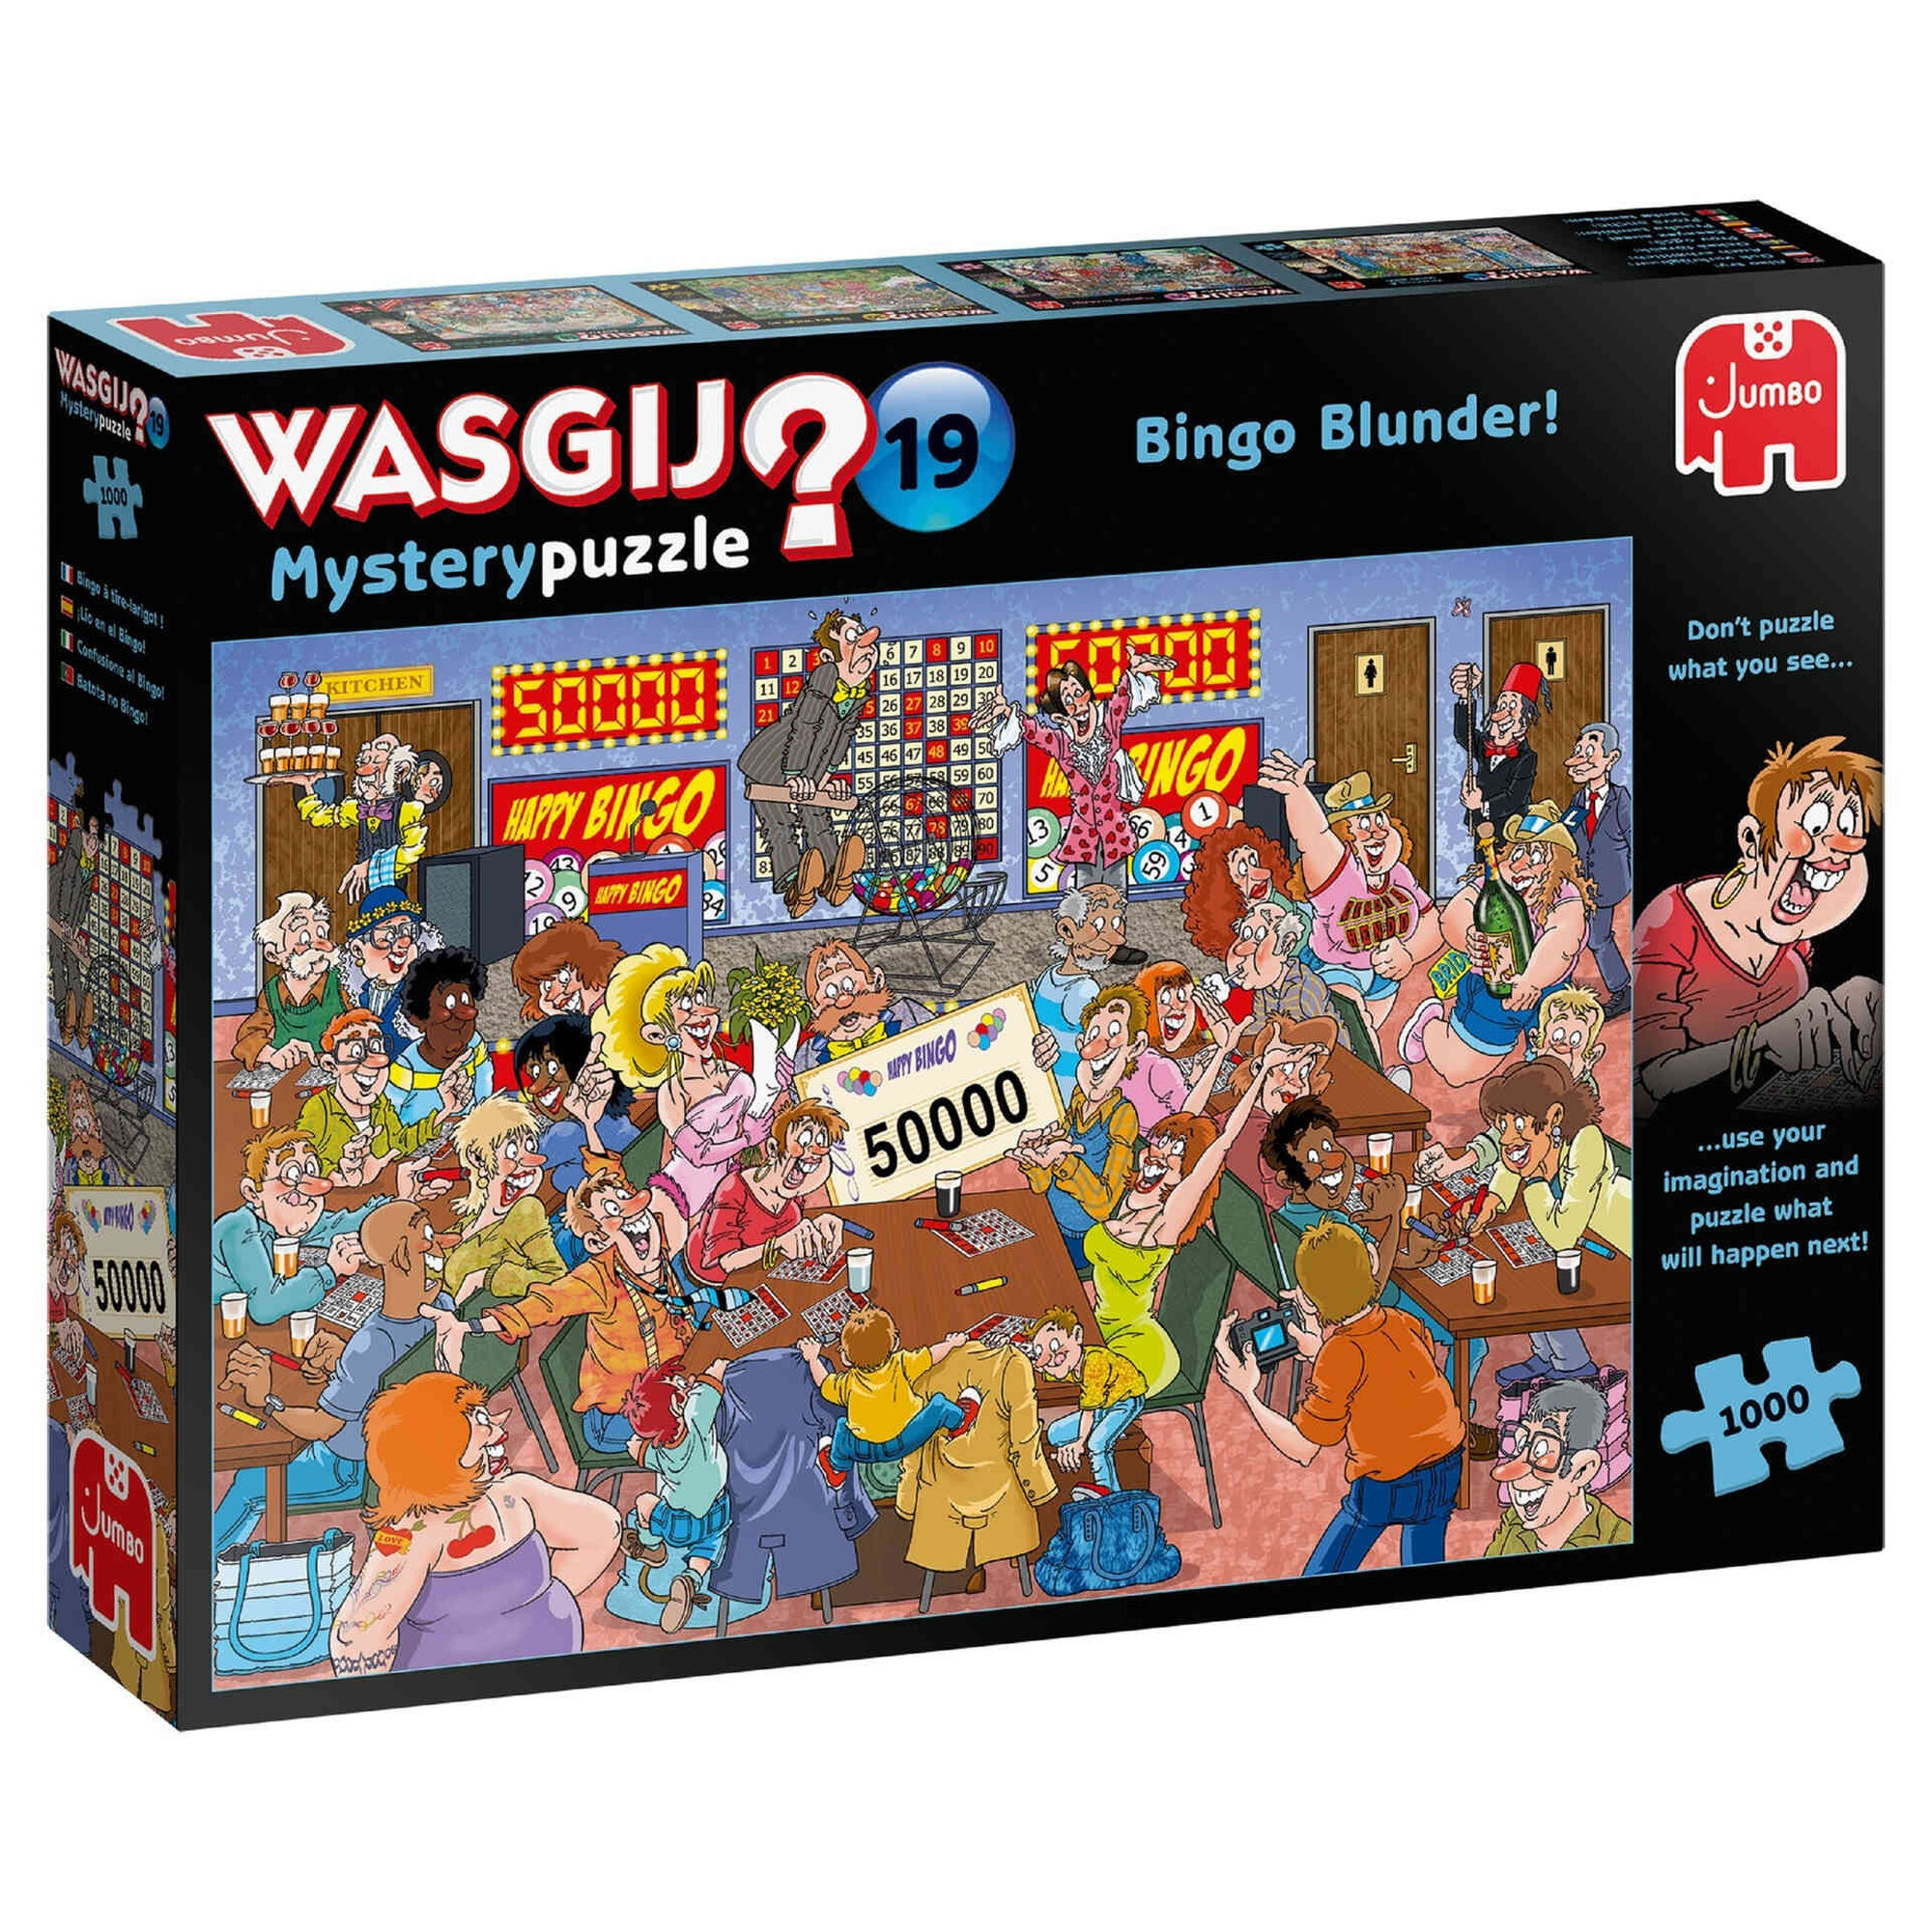 Puzzle Wasgij Mystery 19 - Bingo Blunder (1000 Peças)